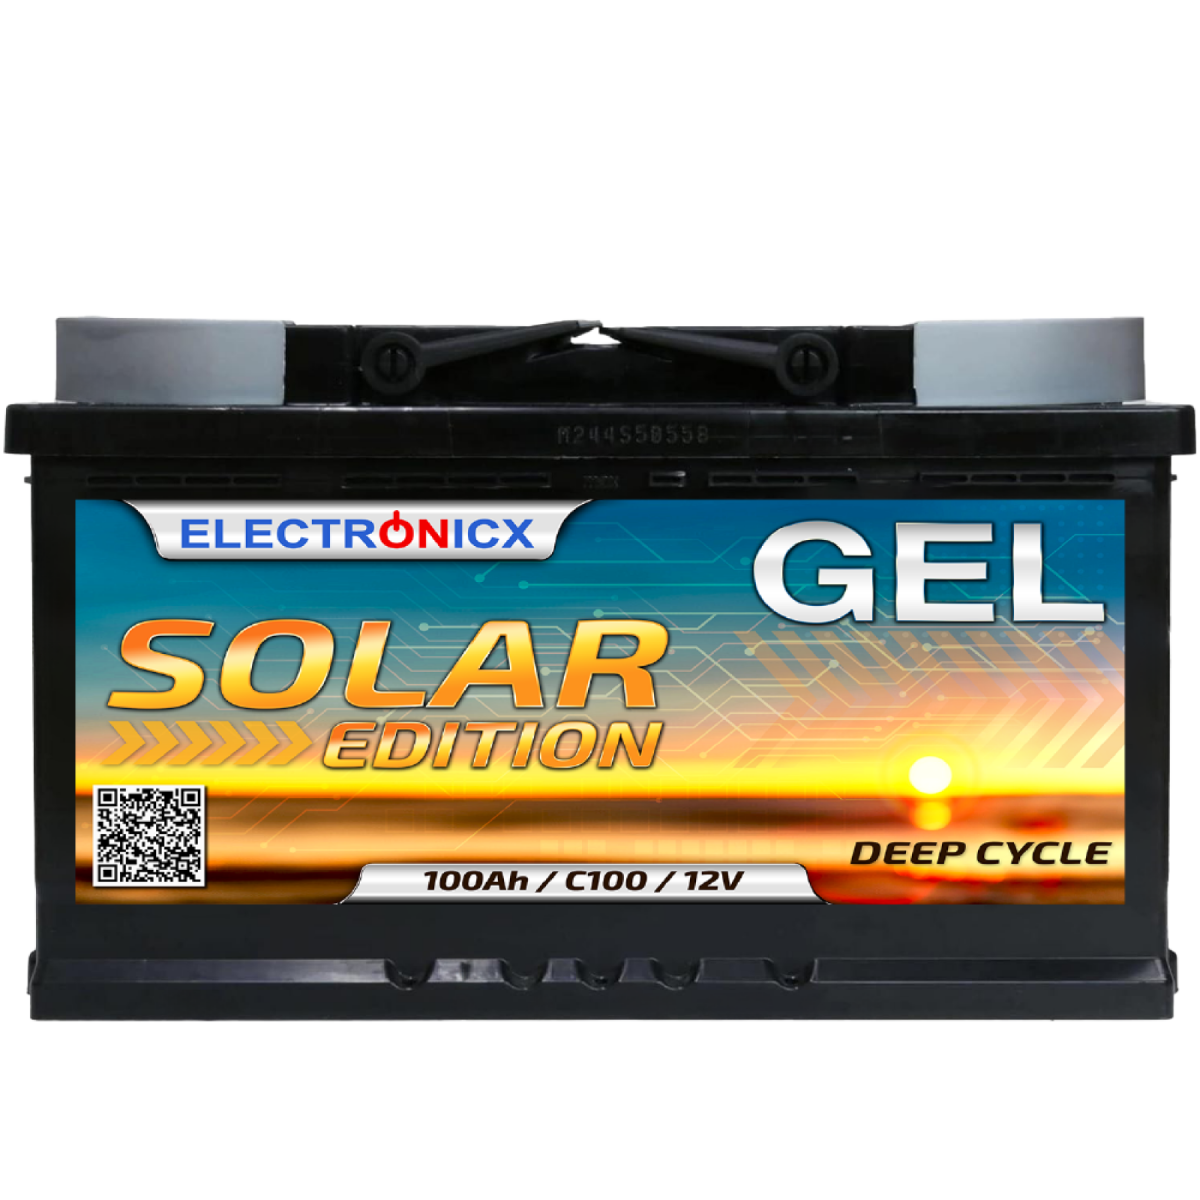 Electronicx Solar Edition gel battery 100 ah 12v solar supply solar battery